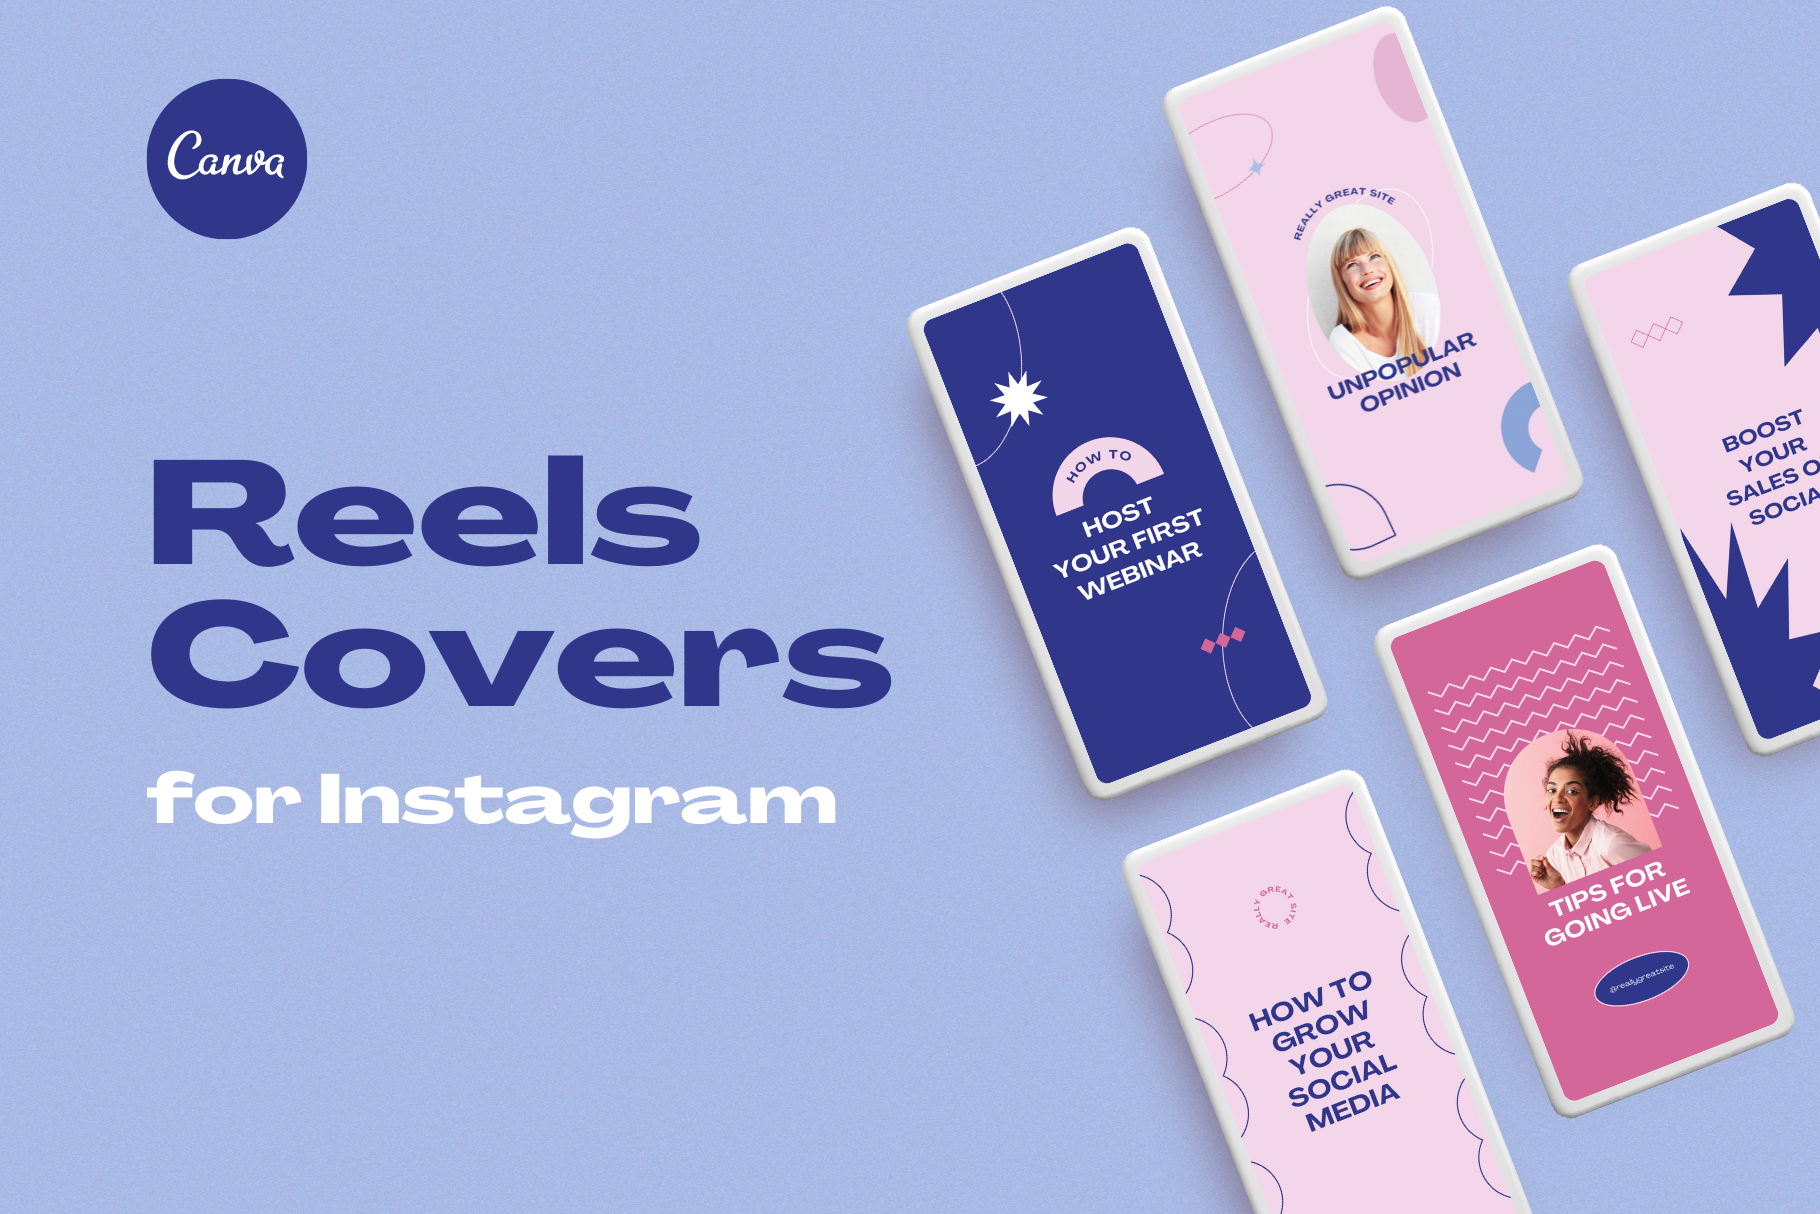 Instagram Reels Cover Templates — Canva Templates for Entrepreneurs